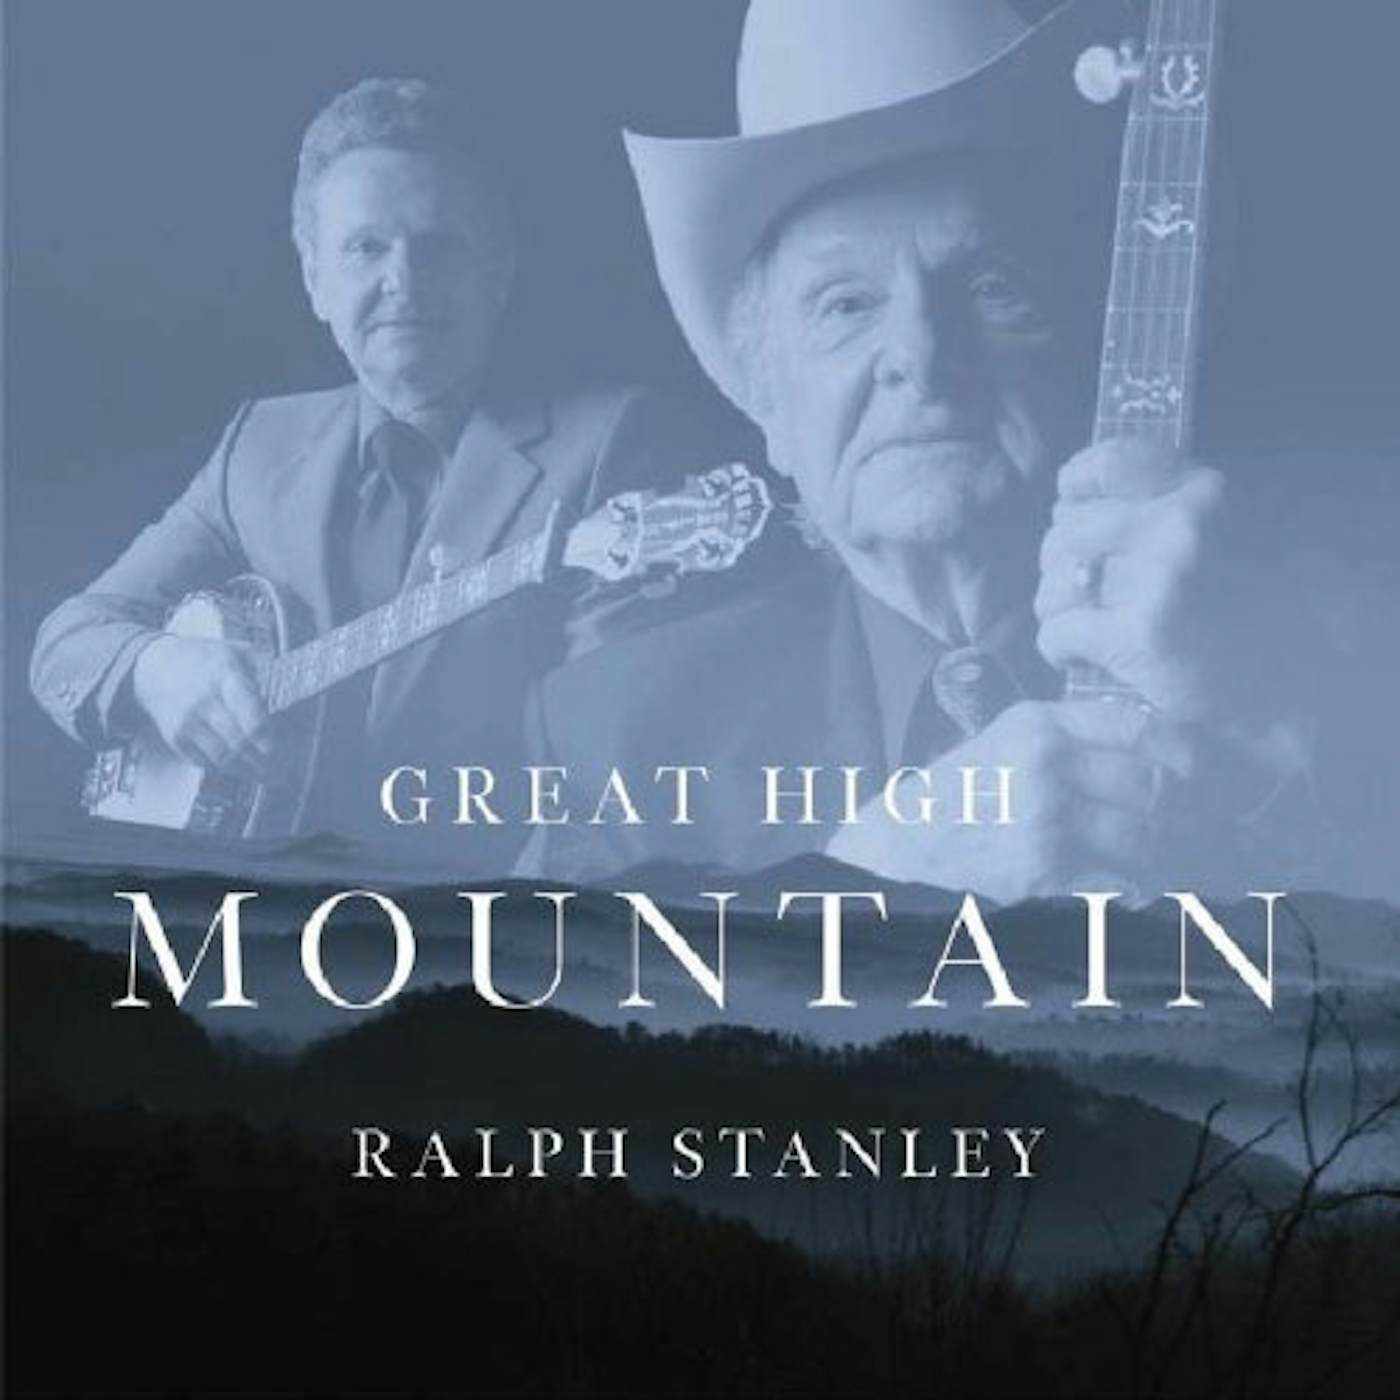 Ralph Stanley GREAT HIGH MOUNTAIN CD